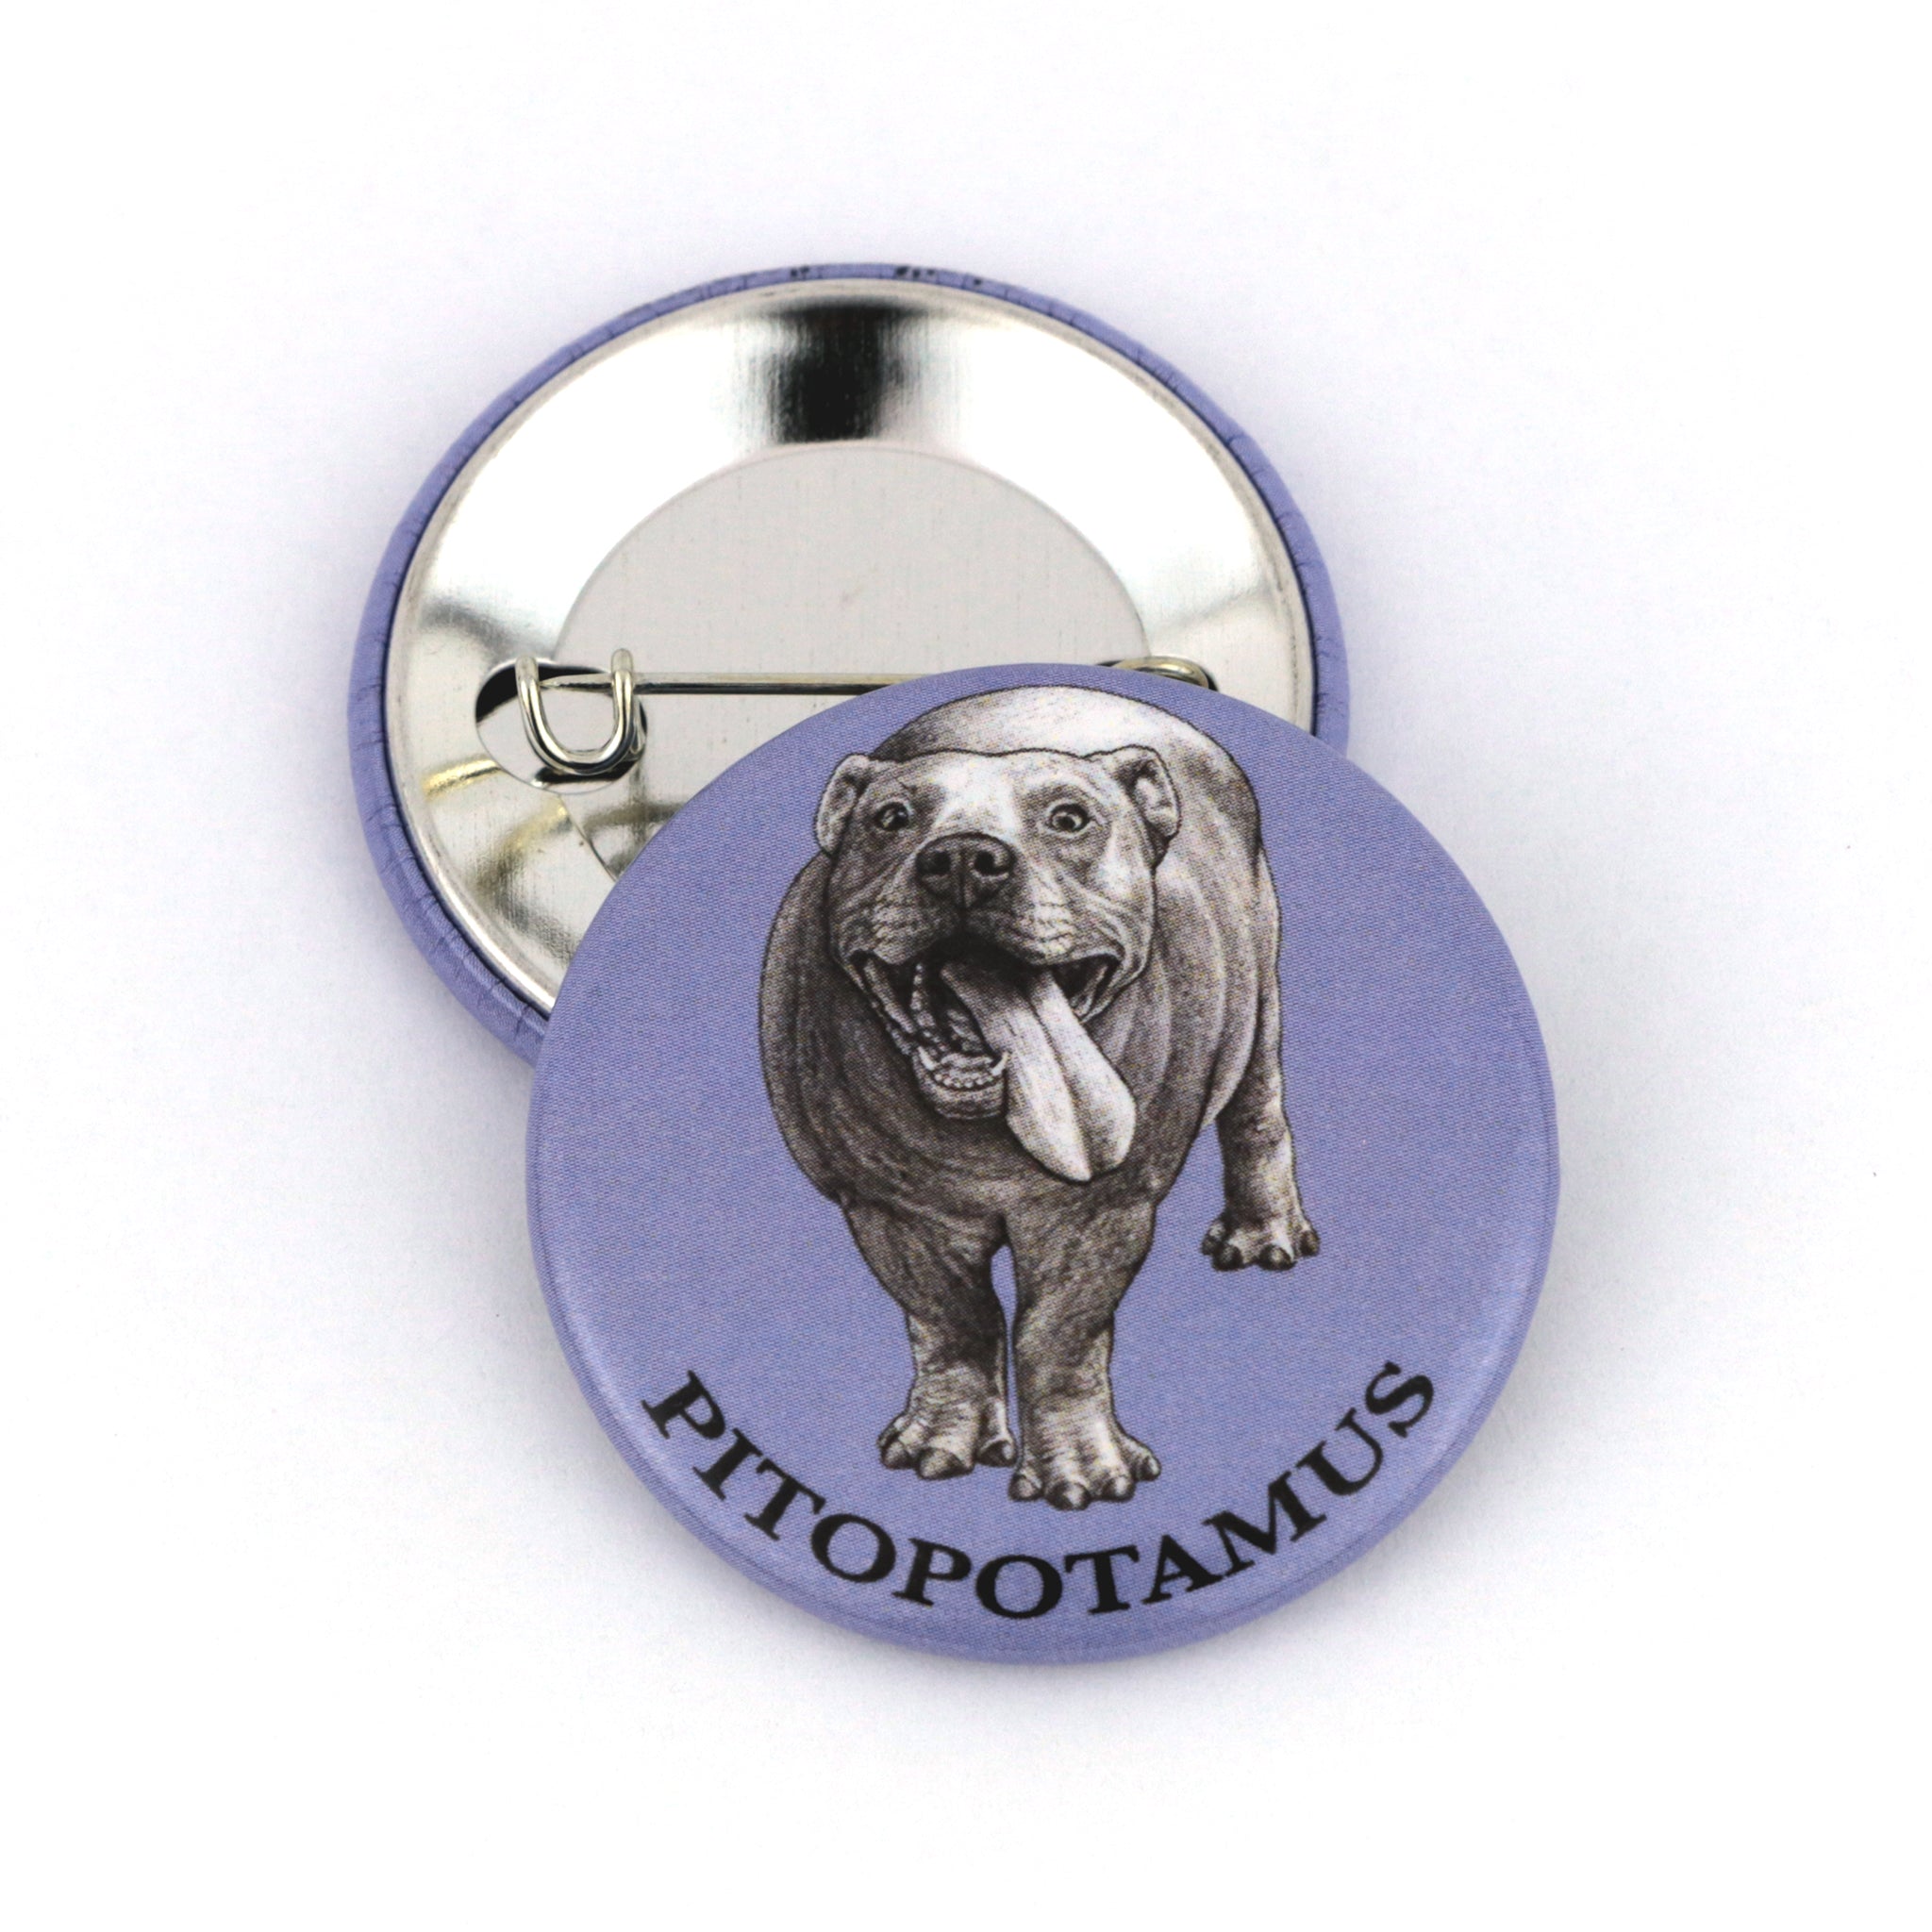 Pitopotamus | Pitbull + Hippopotamus Hybrid Animal | 1.5" Pinback Button